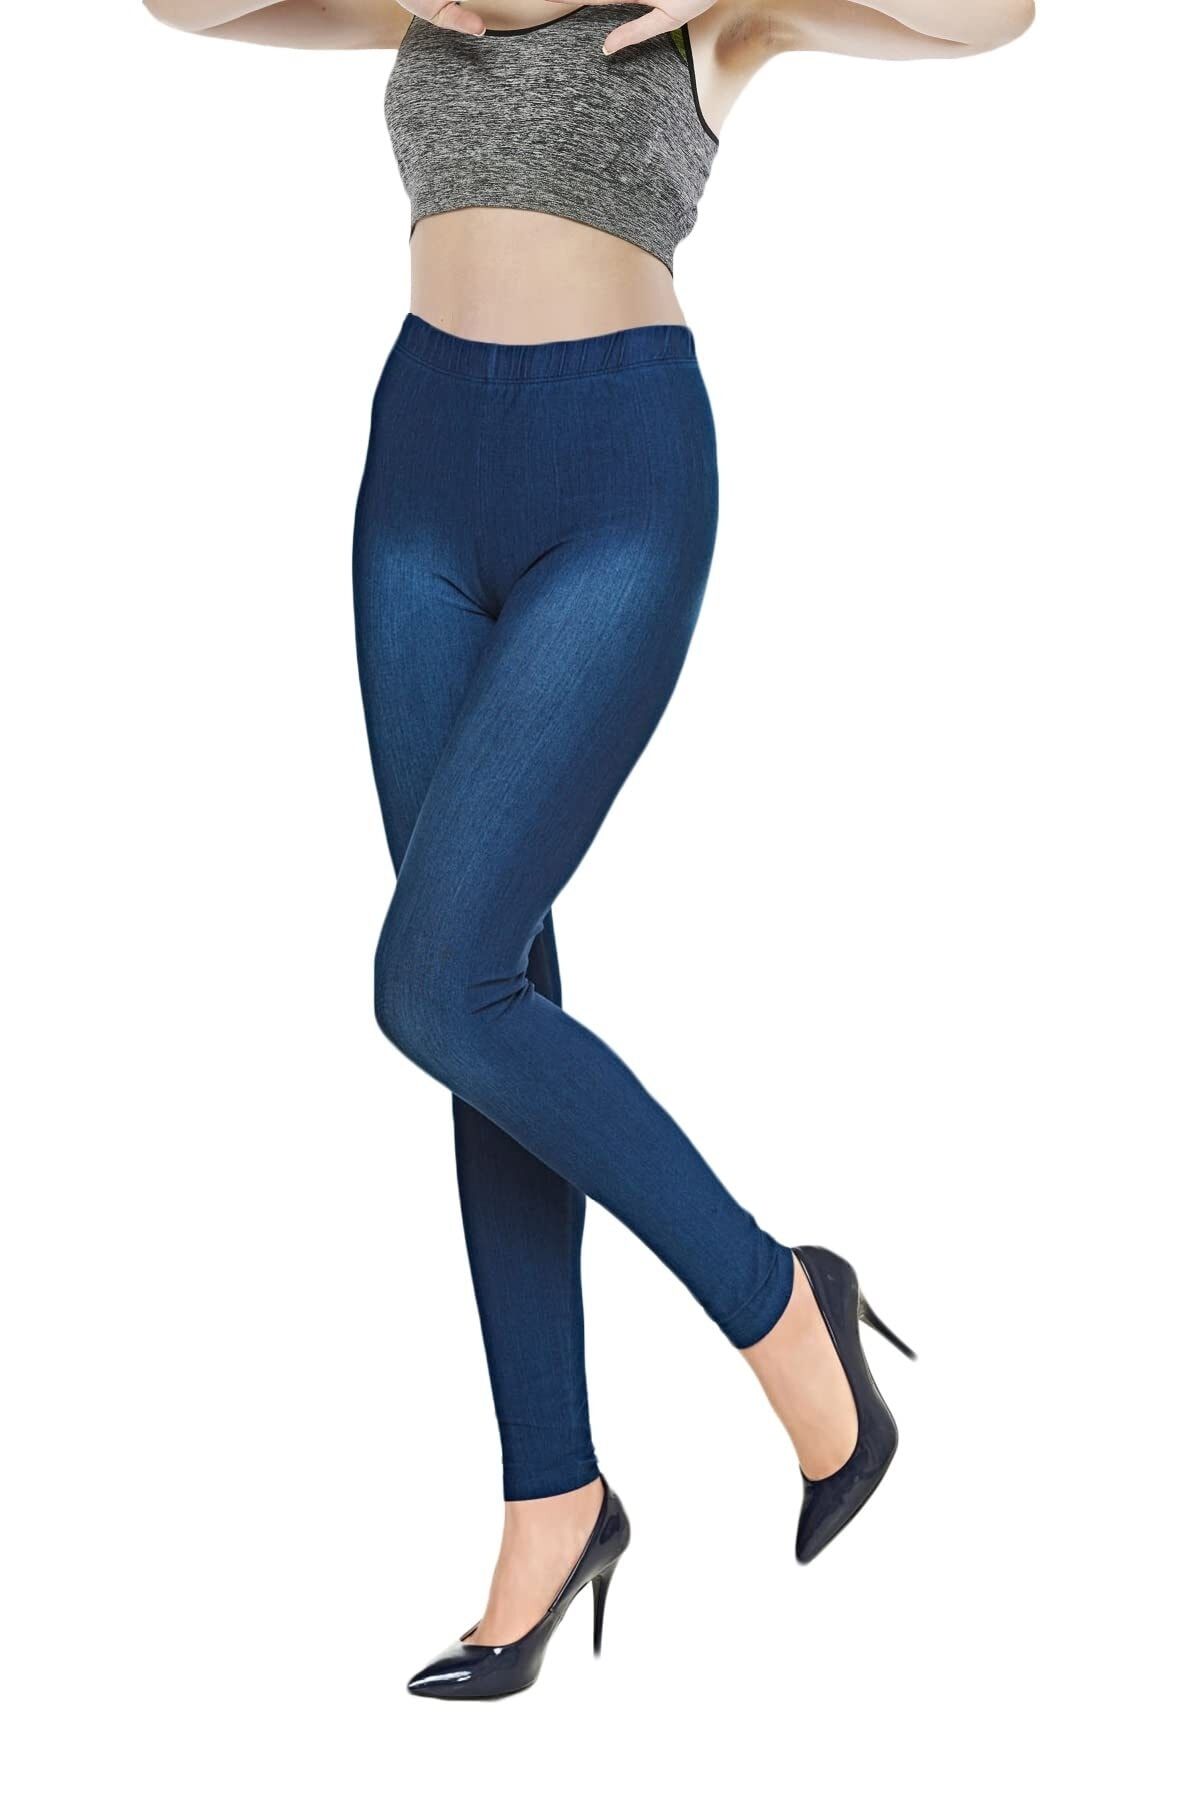 fsm1453 Women's Denim Patterned Lycra Thin Fabric Summer Leggings -4827 -  Trendyol